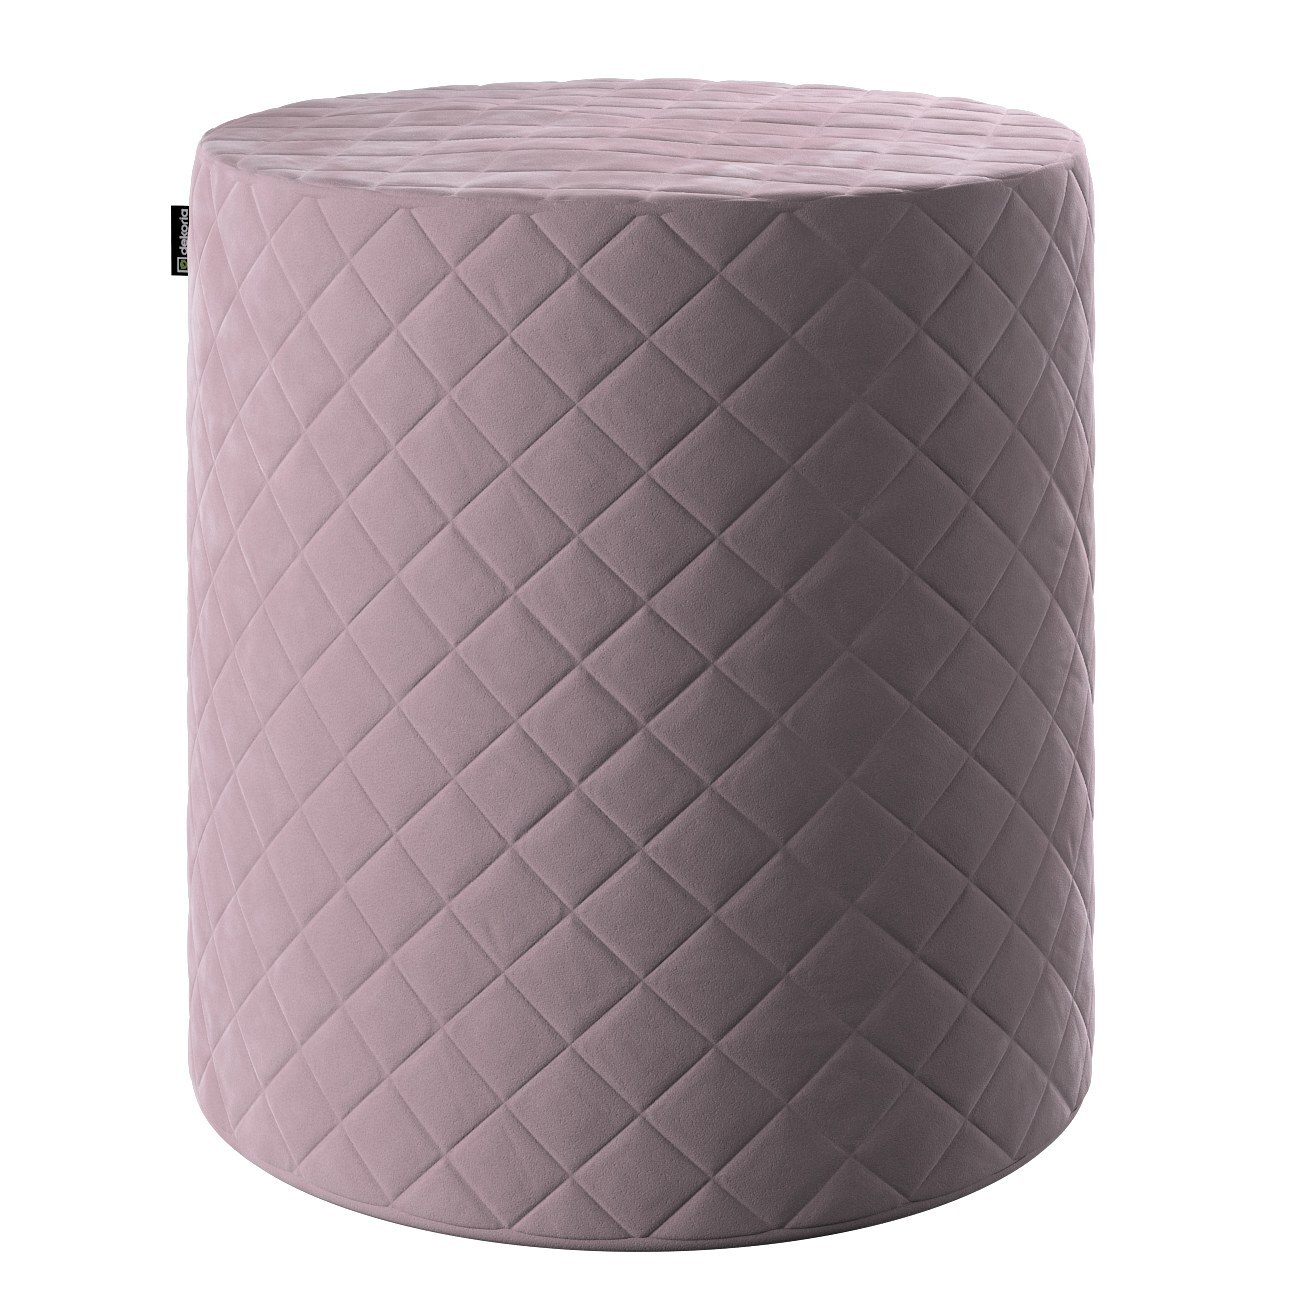 Pouf Barrel gesteppt, rosa, ø 40 x 40 cm, Velvet (704-14) günstig online kaufen